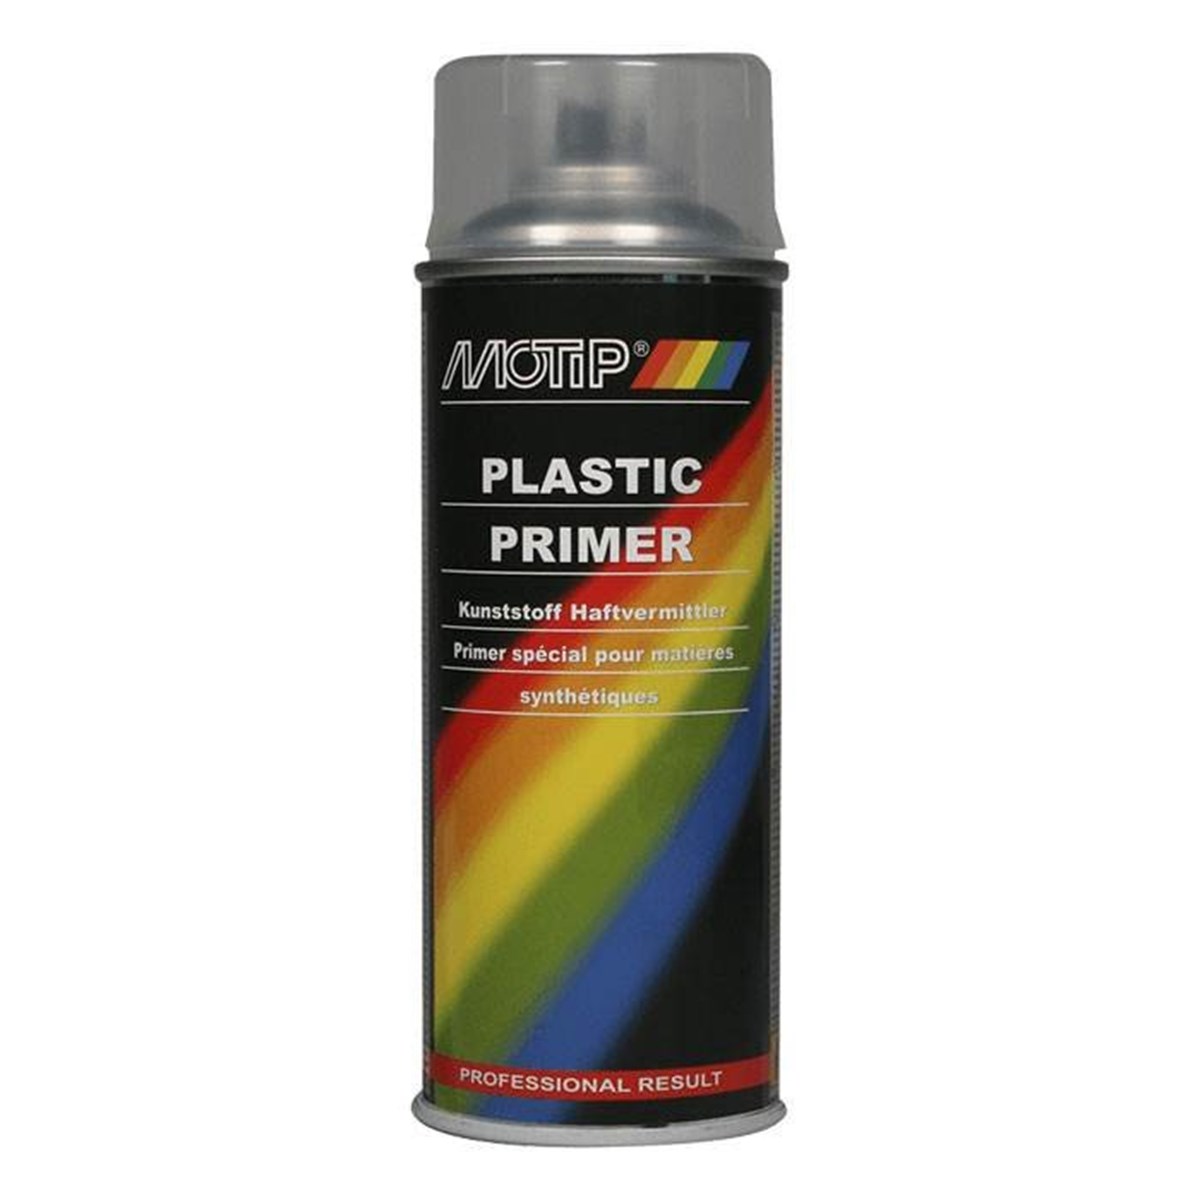 Motip Plastic Primer - Primers